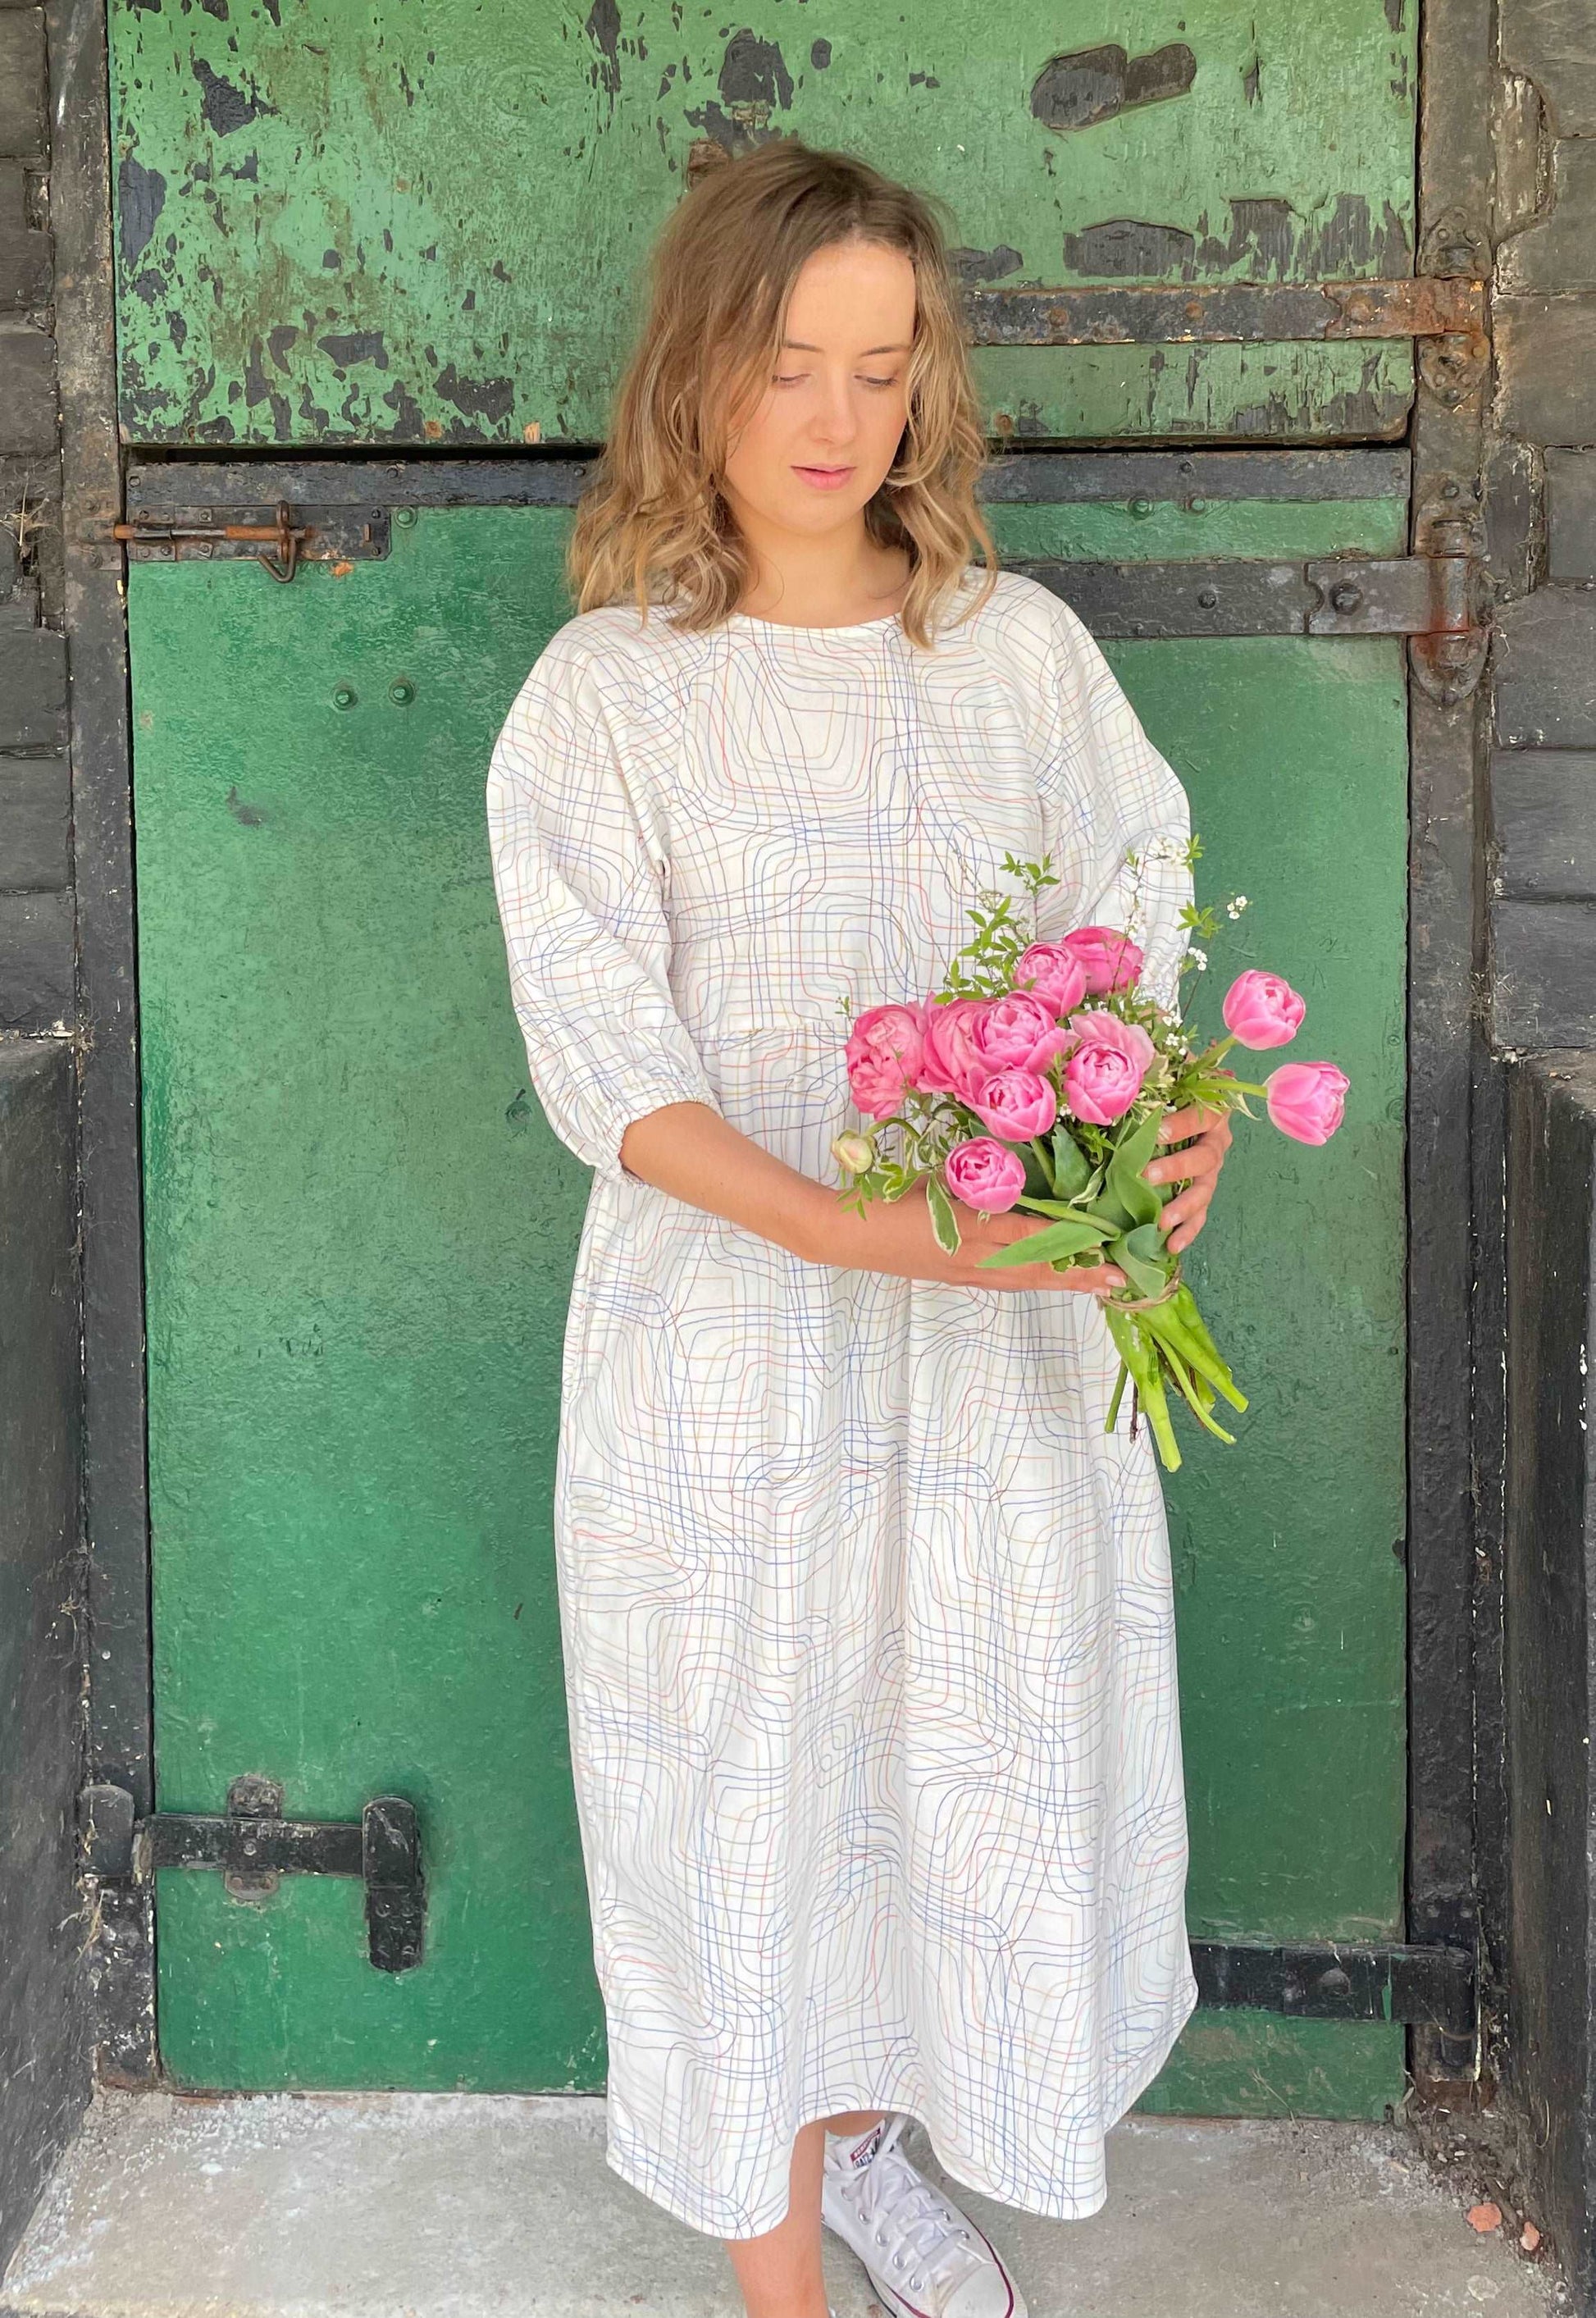 model wearing cream kay dress holding a bouquet